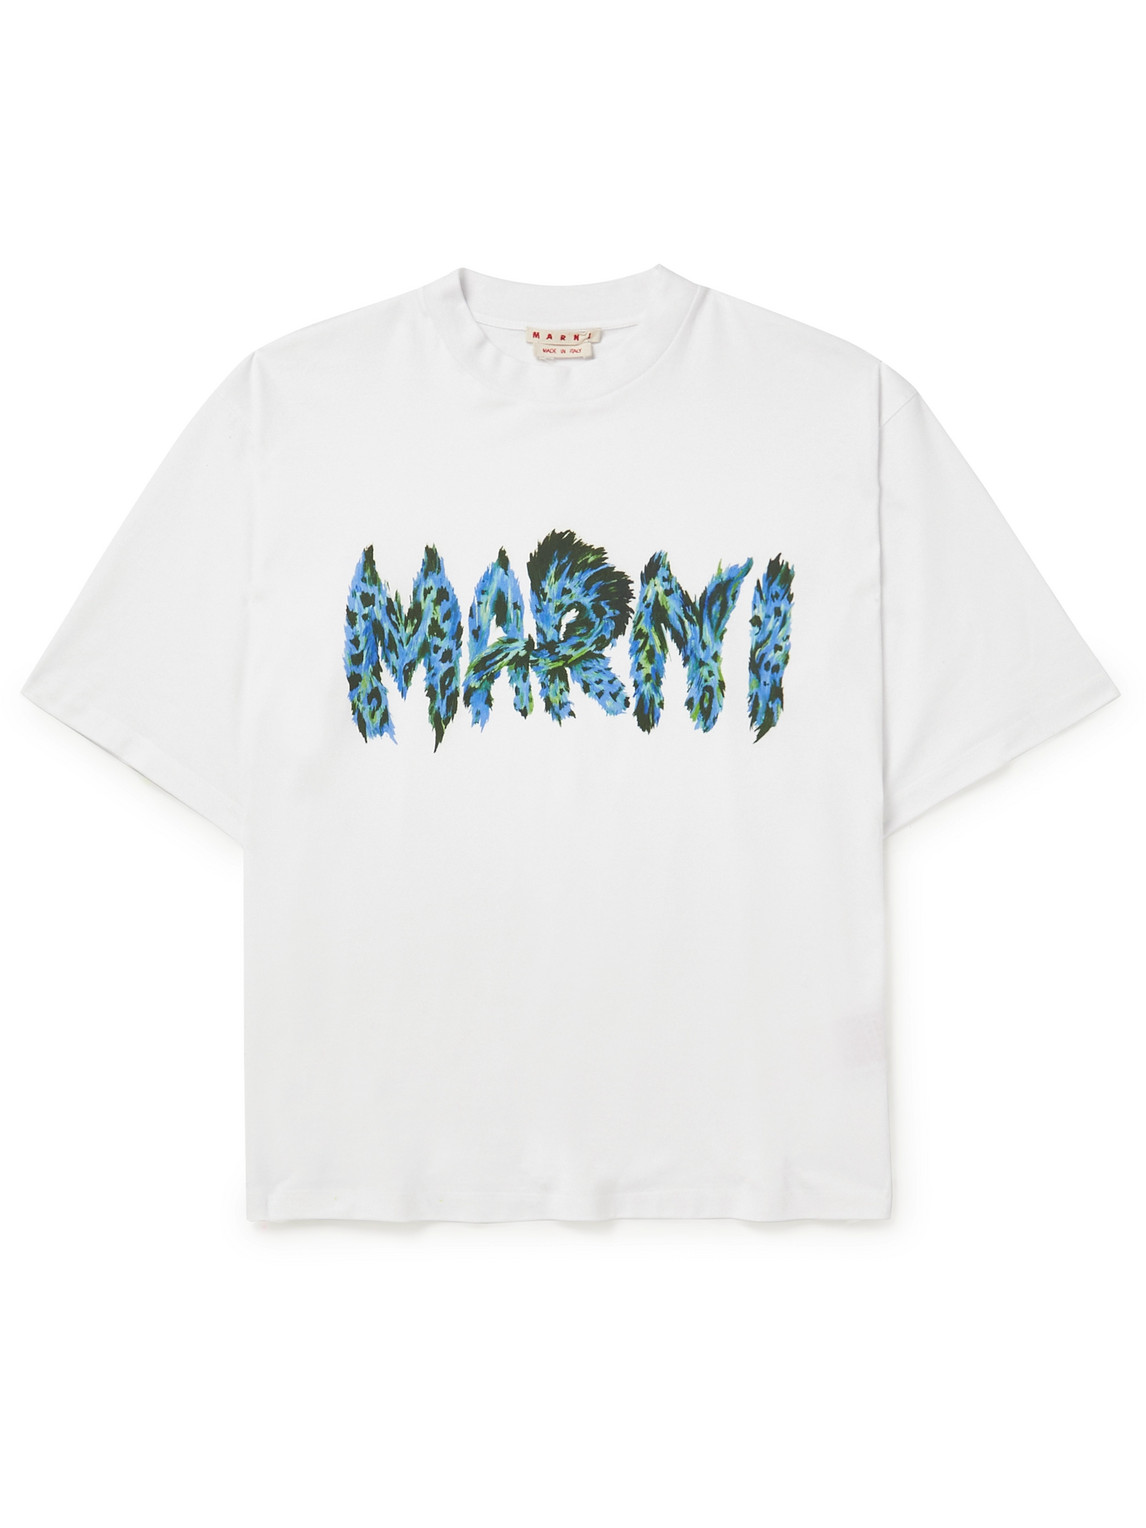 Marni Logo-Print Cotton-Jersey T-Shirt